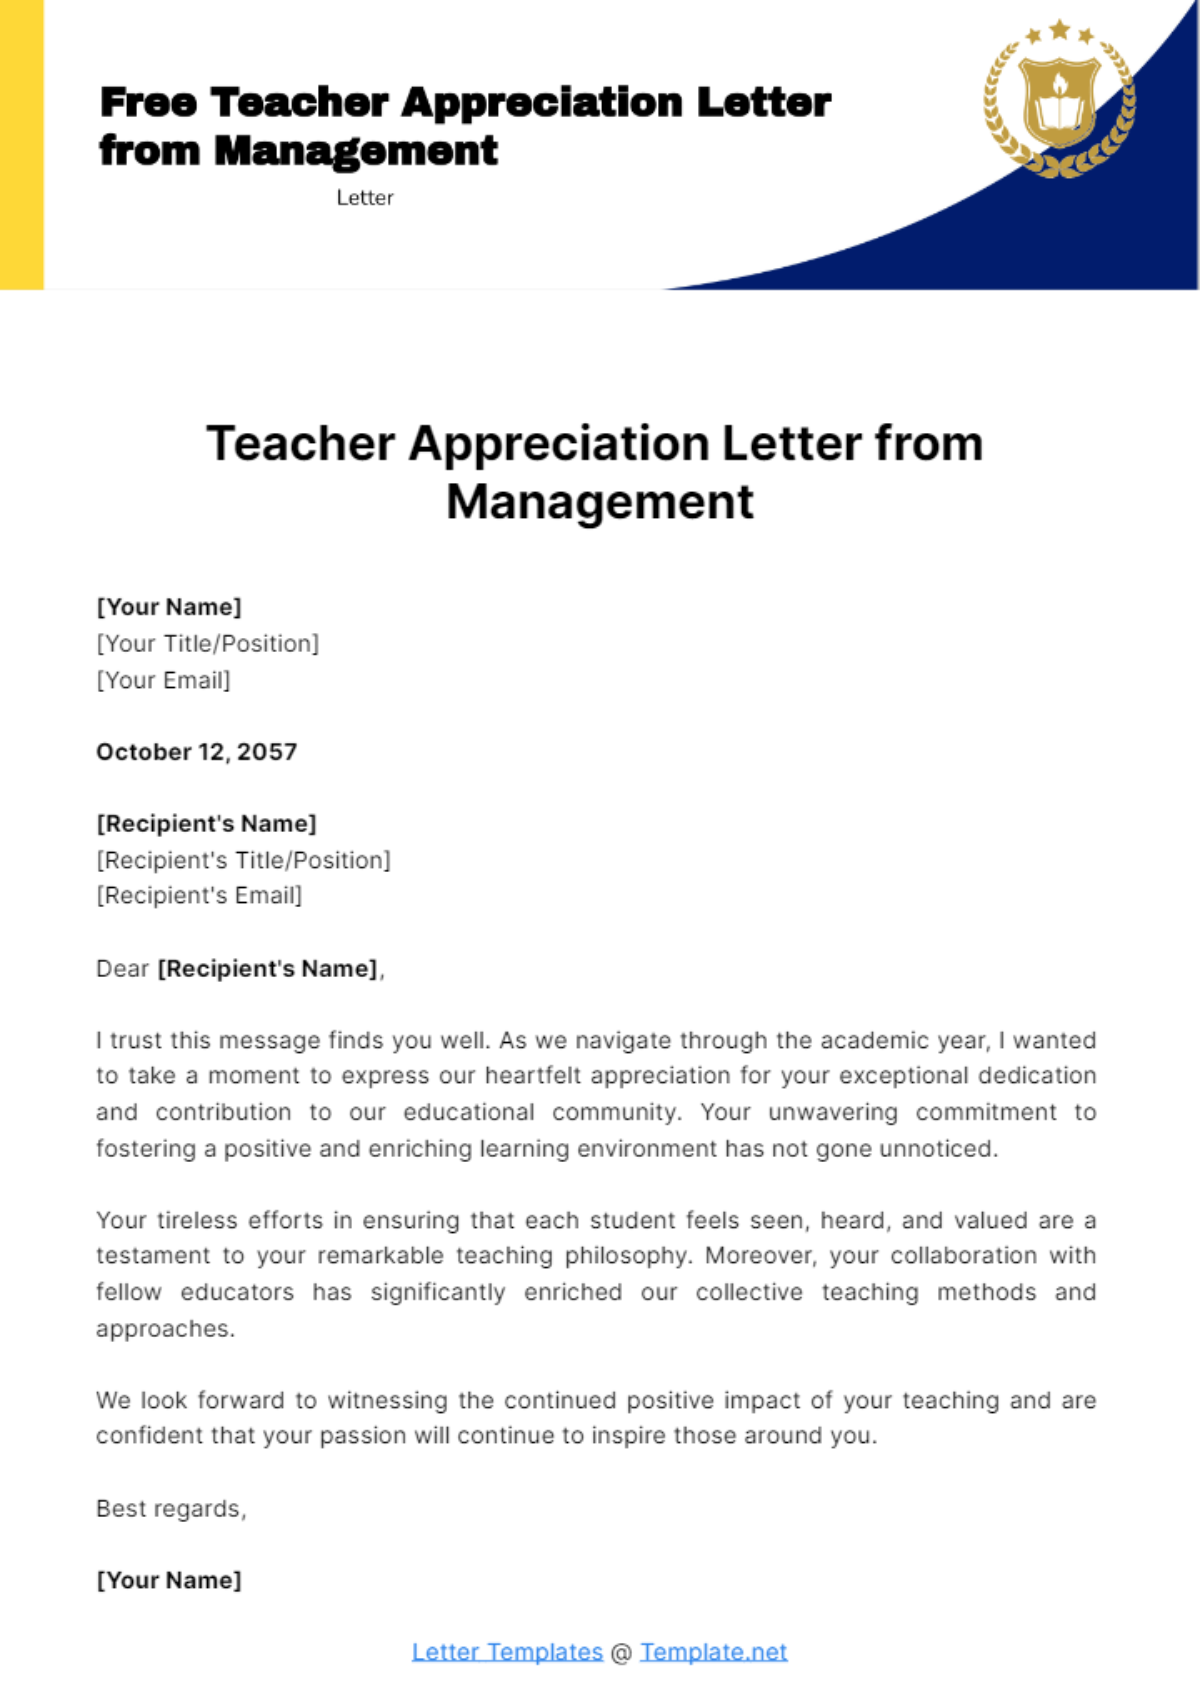 Teacher Appreciation Letter from Management Template